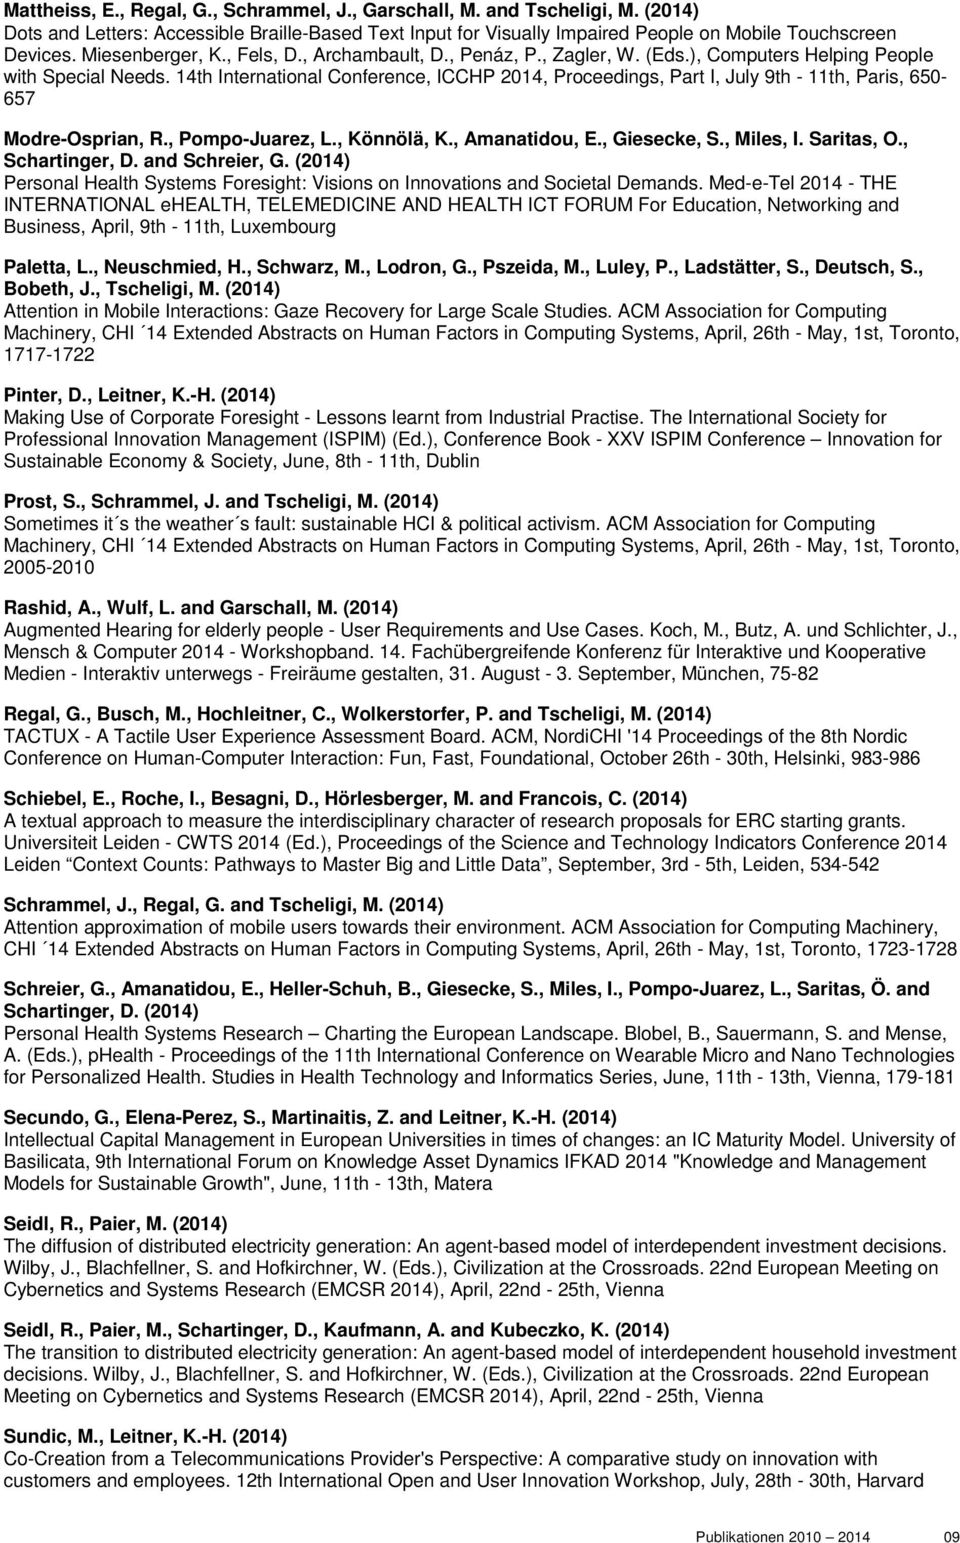 14th International Conference, ICCHP 2014, Proceedings, Part I, July 9th - 11th, Paris, 650-657 Modre-Osprian, R., Pompo-Juarez, L., Könnölä, K., Amanatidou, E., Giesecke, S., Miles, I. Saritas, O.